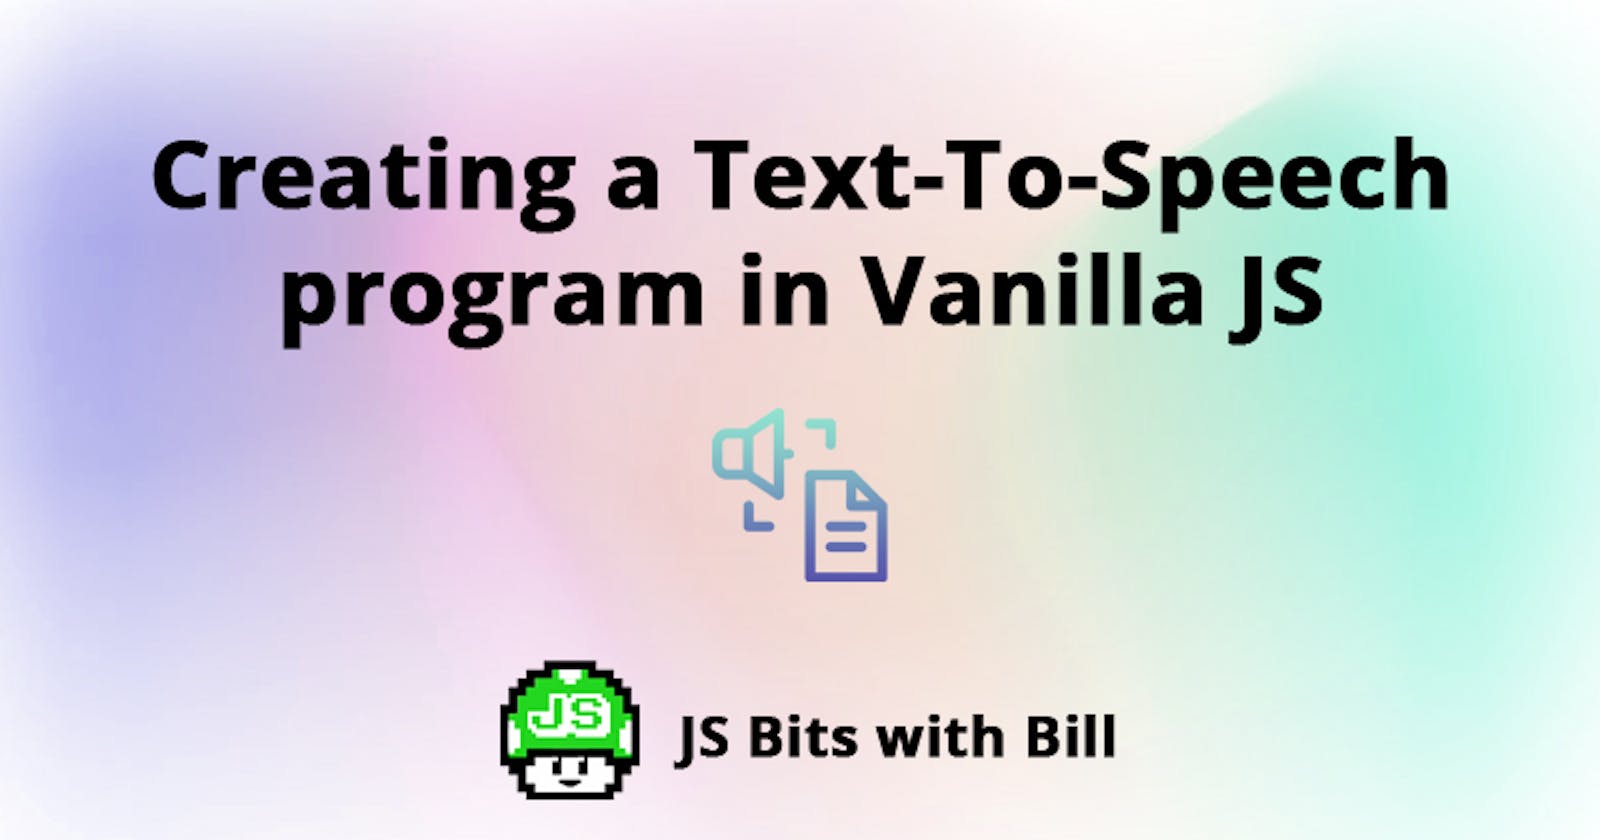 Creating a Text-To-Speech program in Vanilla JS